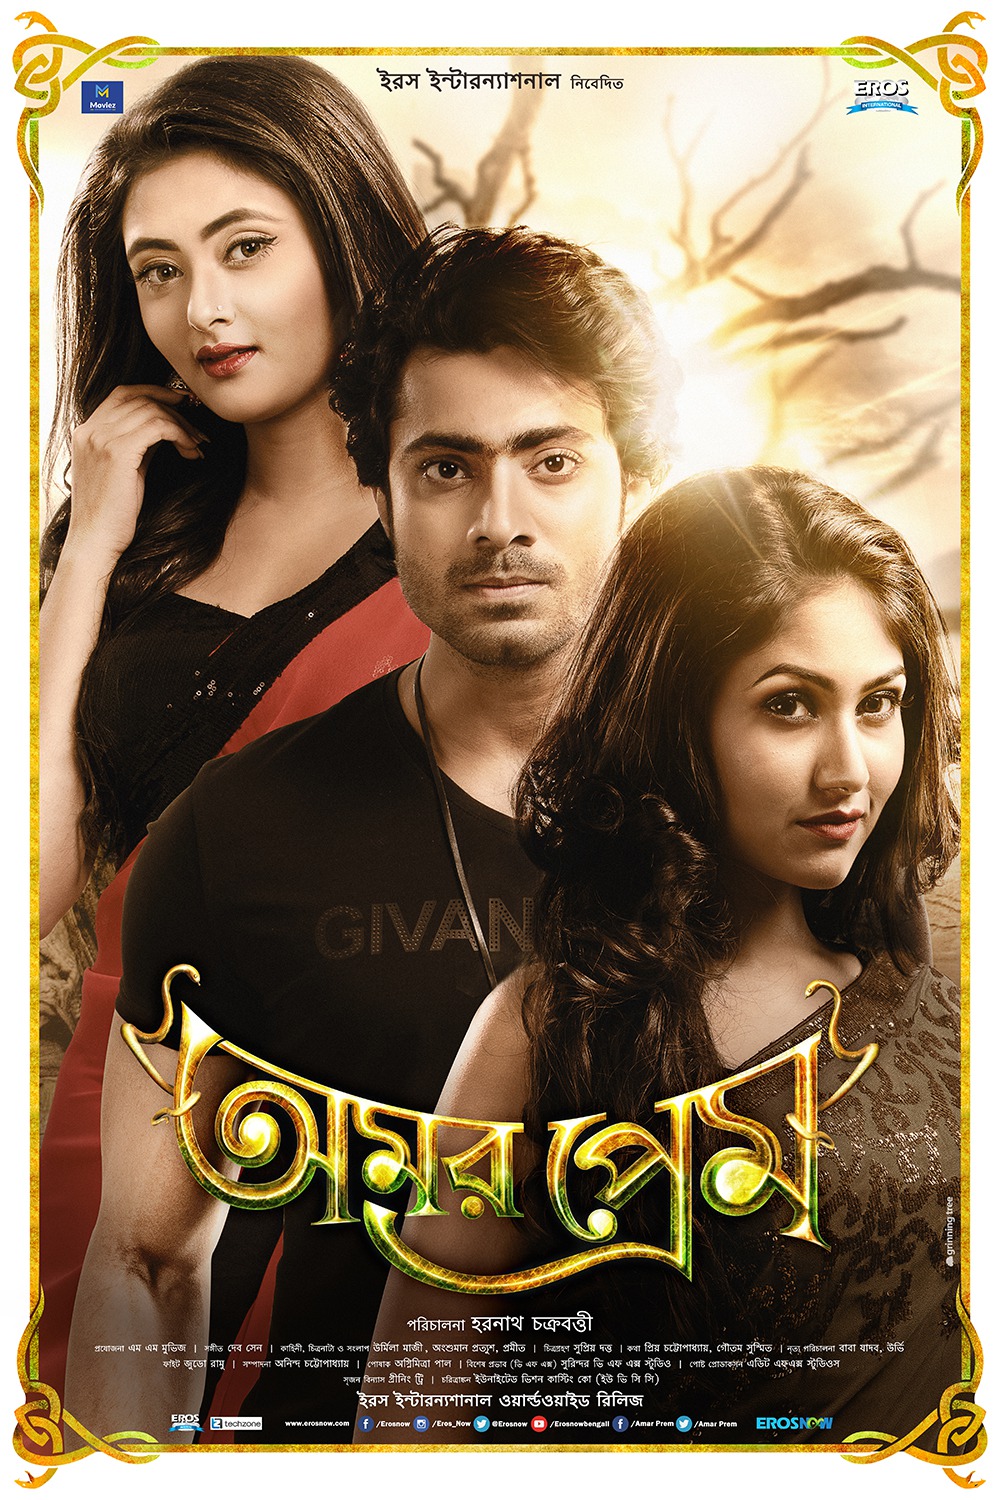 Extra Large Movie Poster Image for Amar Prem (#8 of 9)